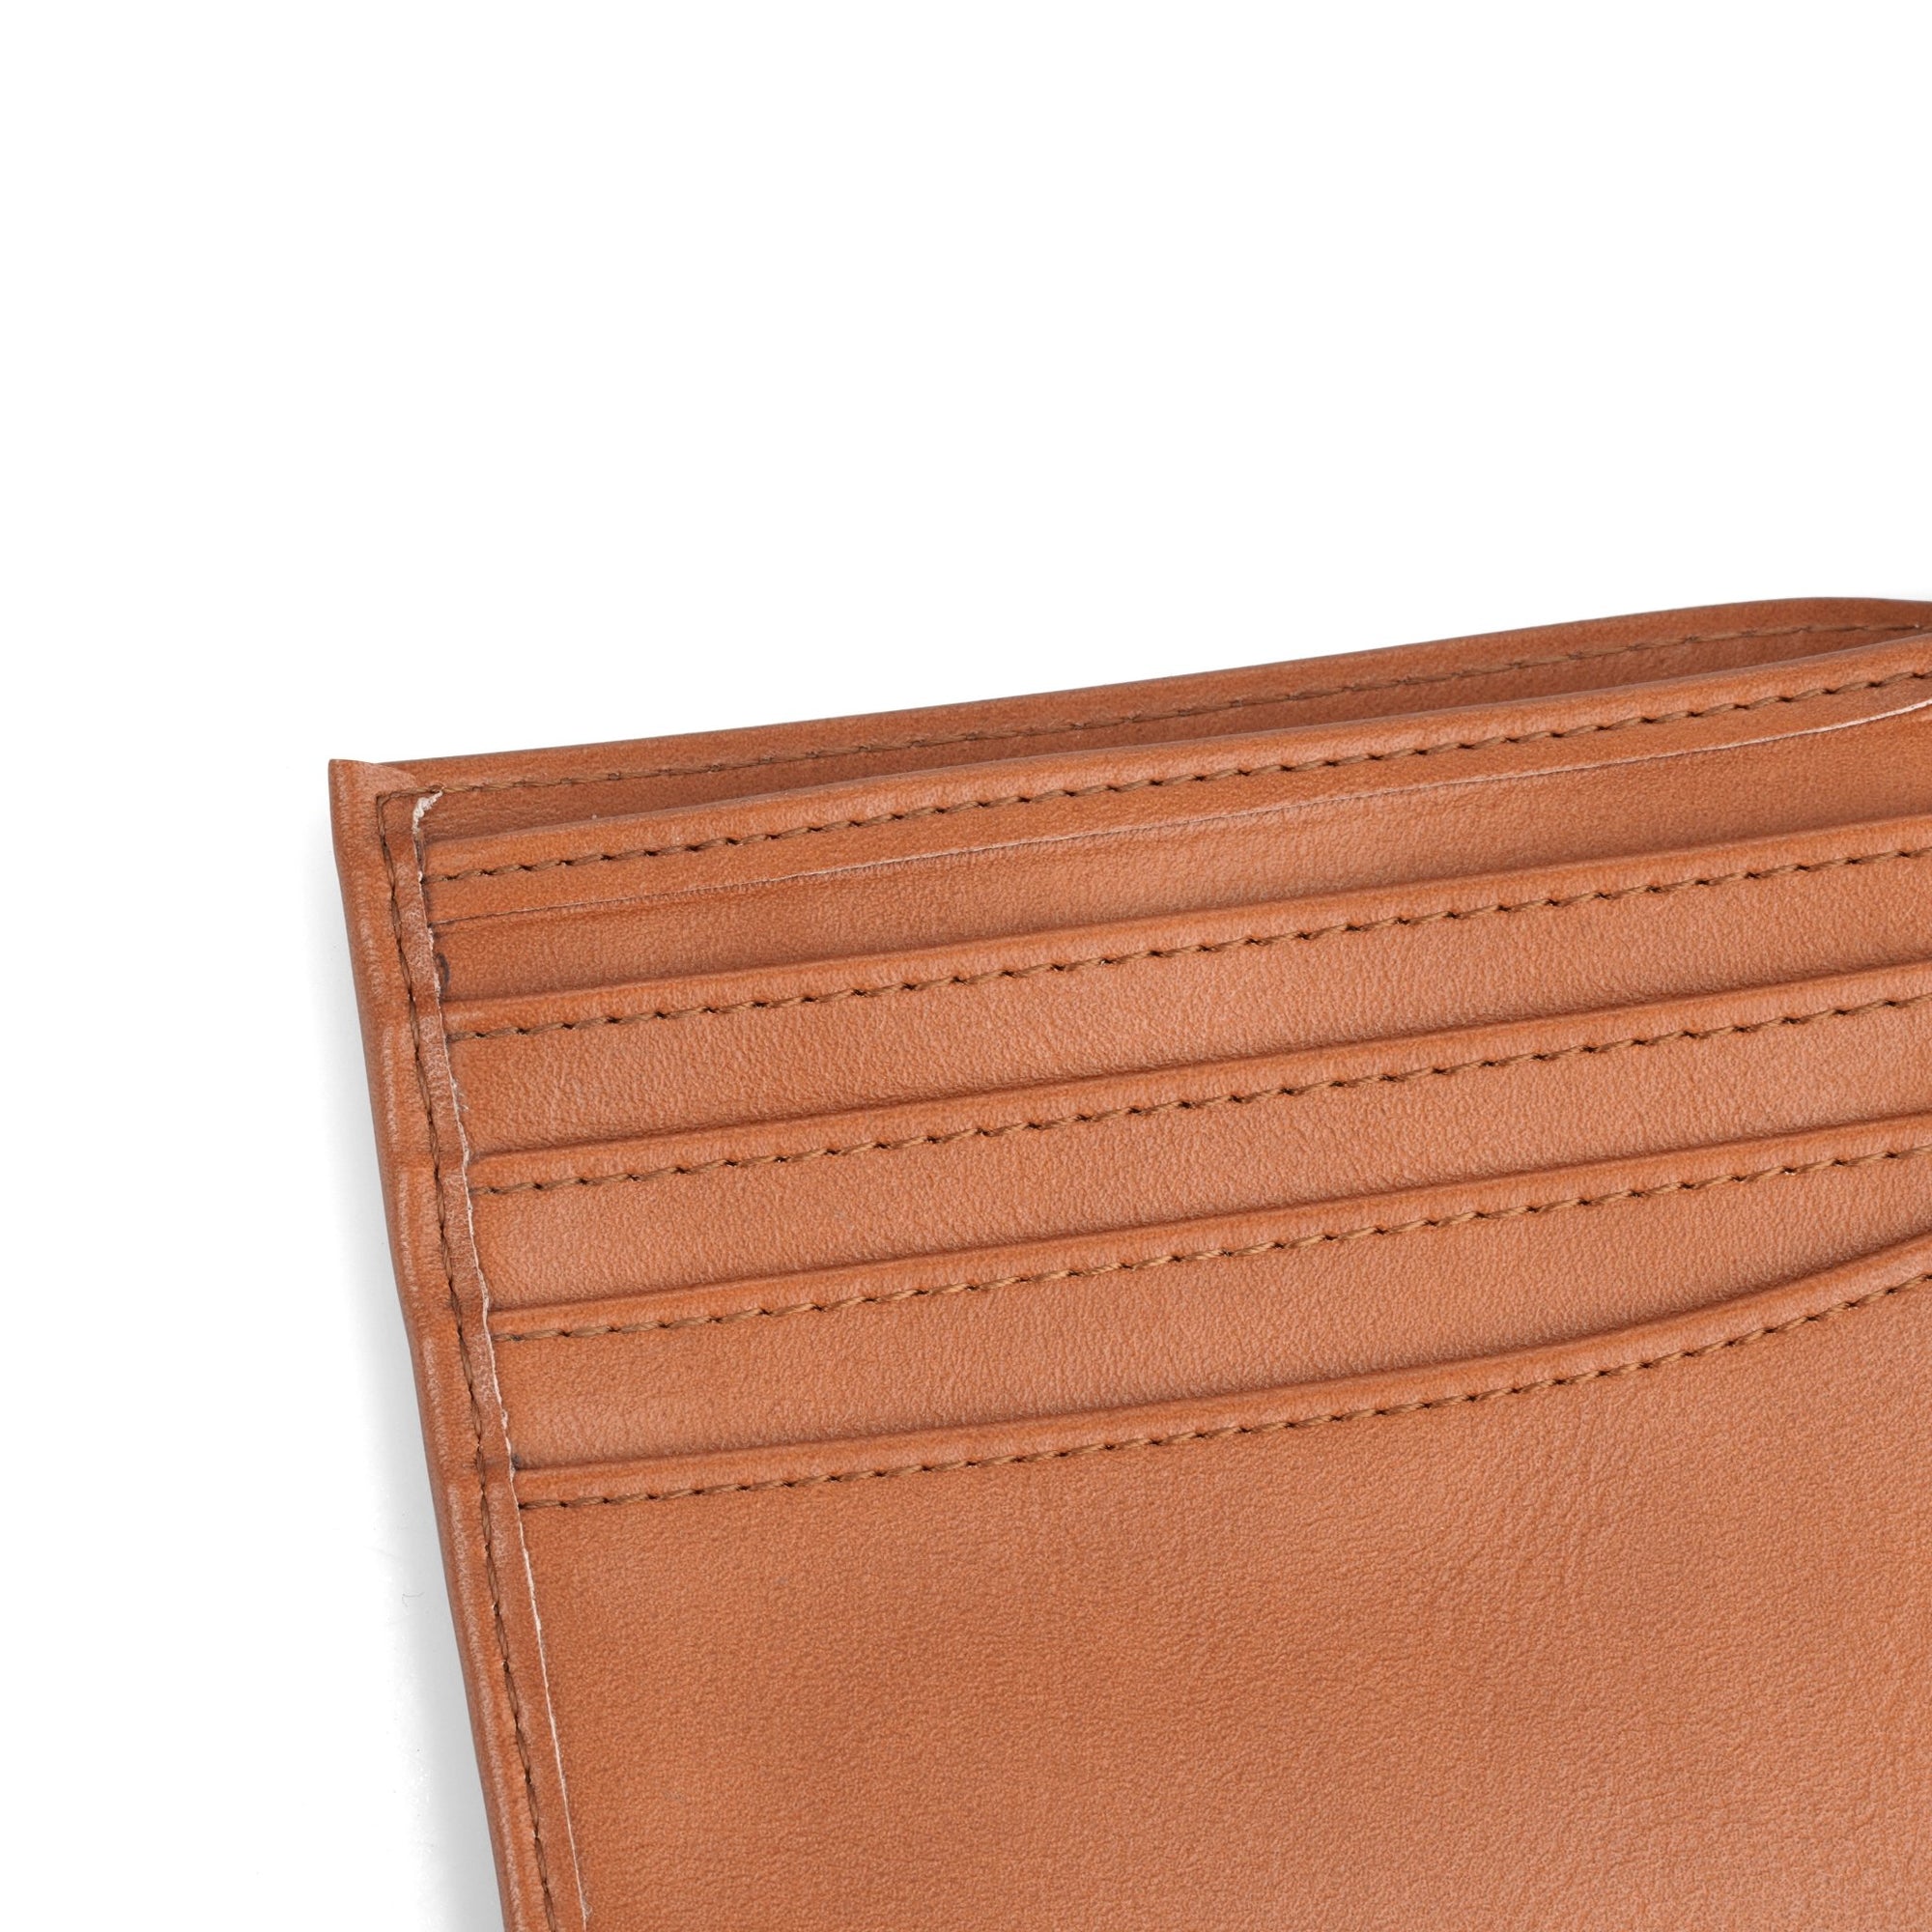 JP Men's Wallet Tan